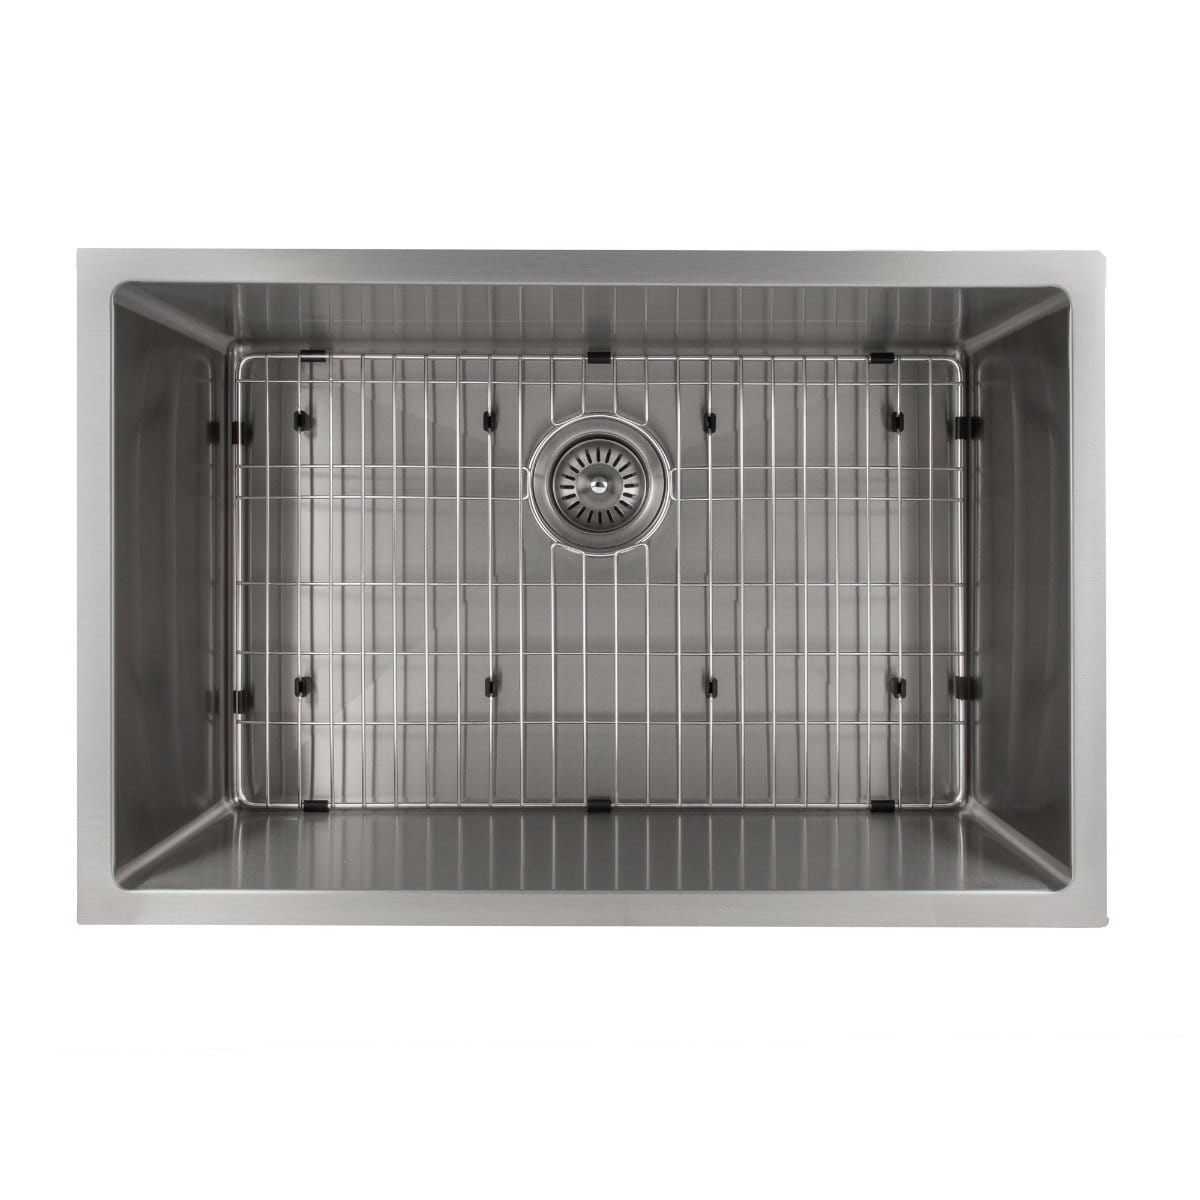 ZLINE Meribel 30" Undermount Single Bowl Sink in Stainless Steel (SRS-30)